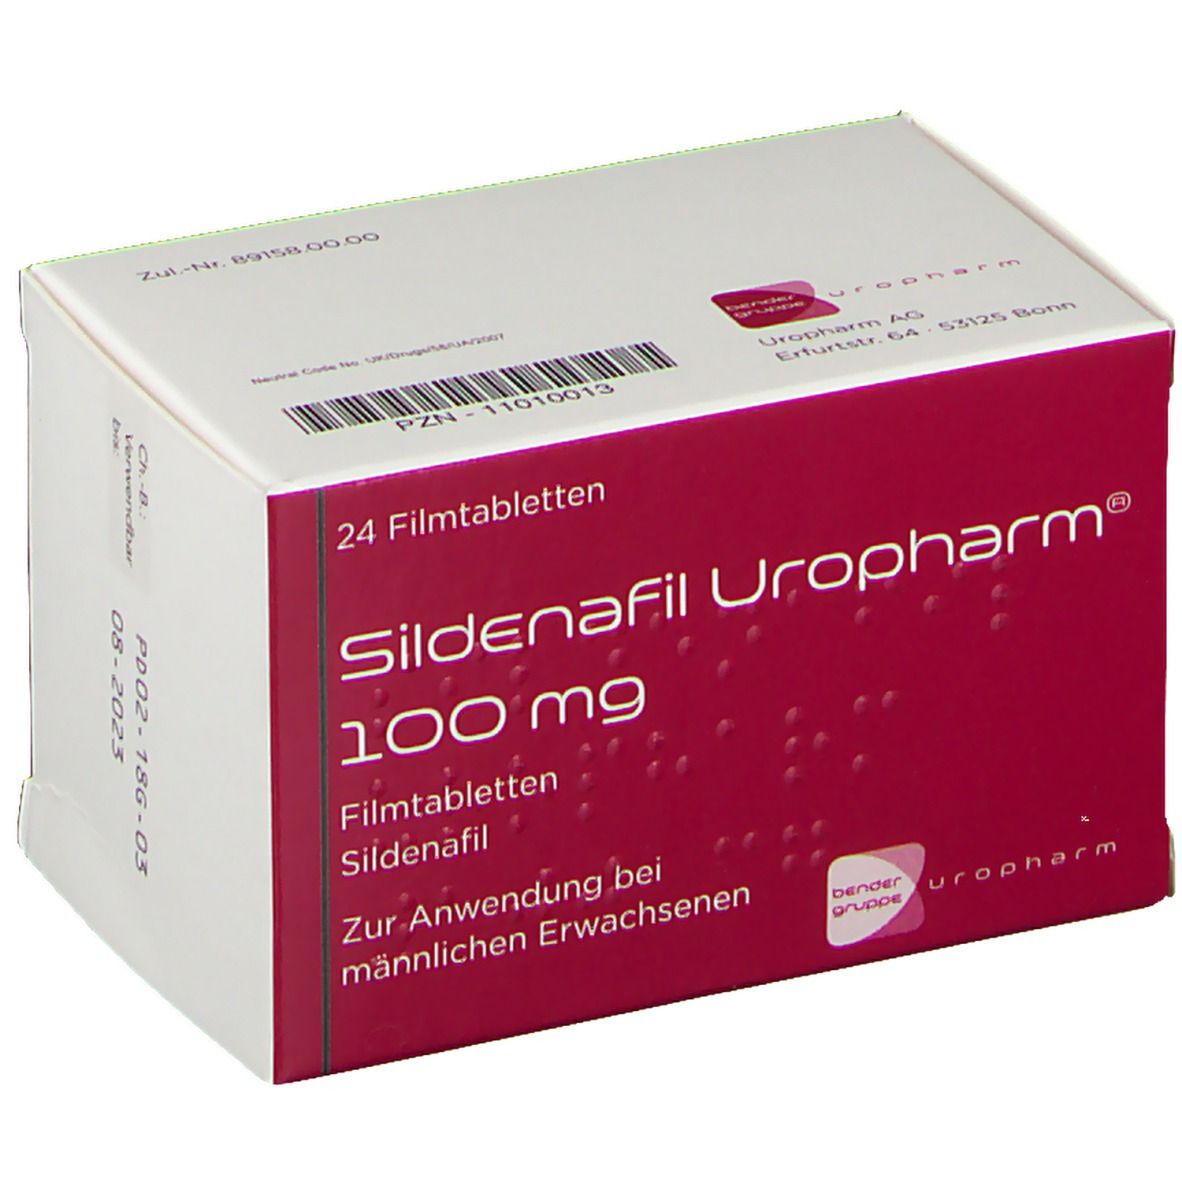 Sildenafil® Uropharm 100Mg